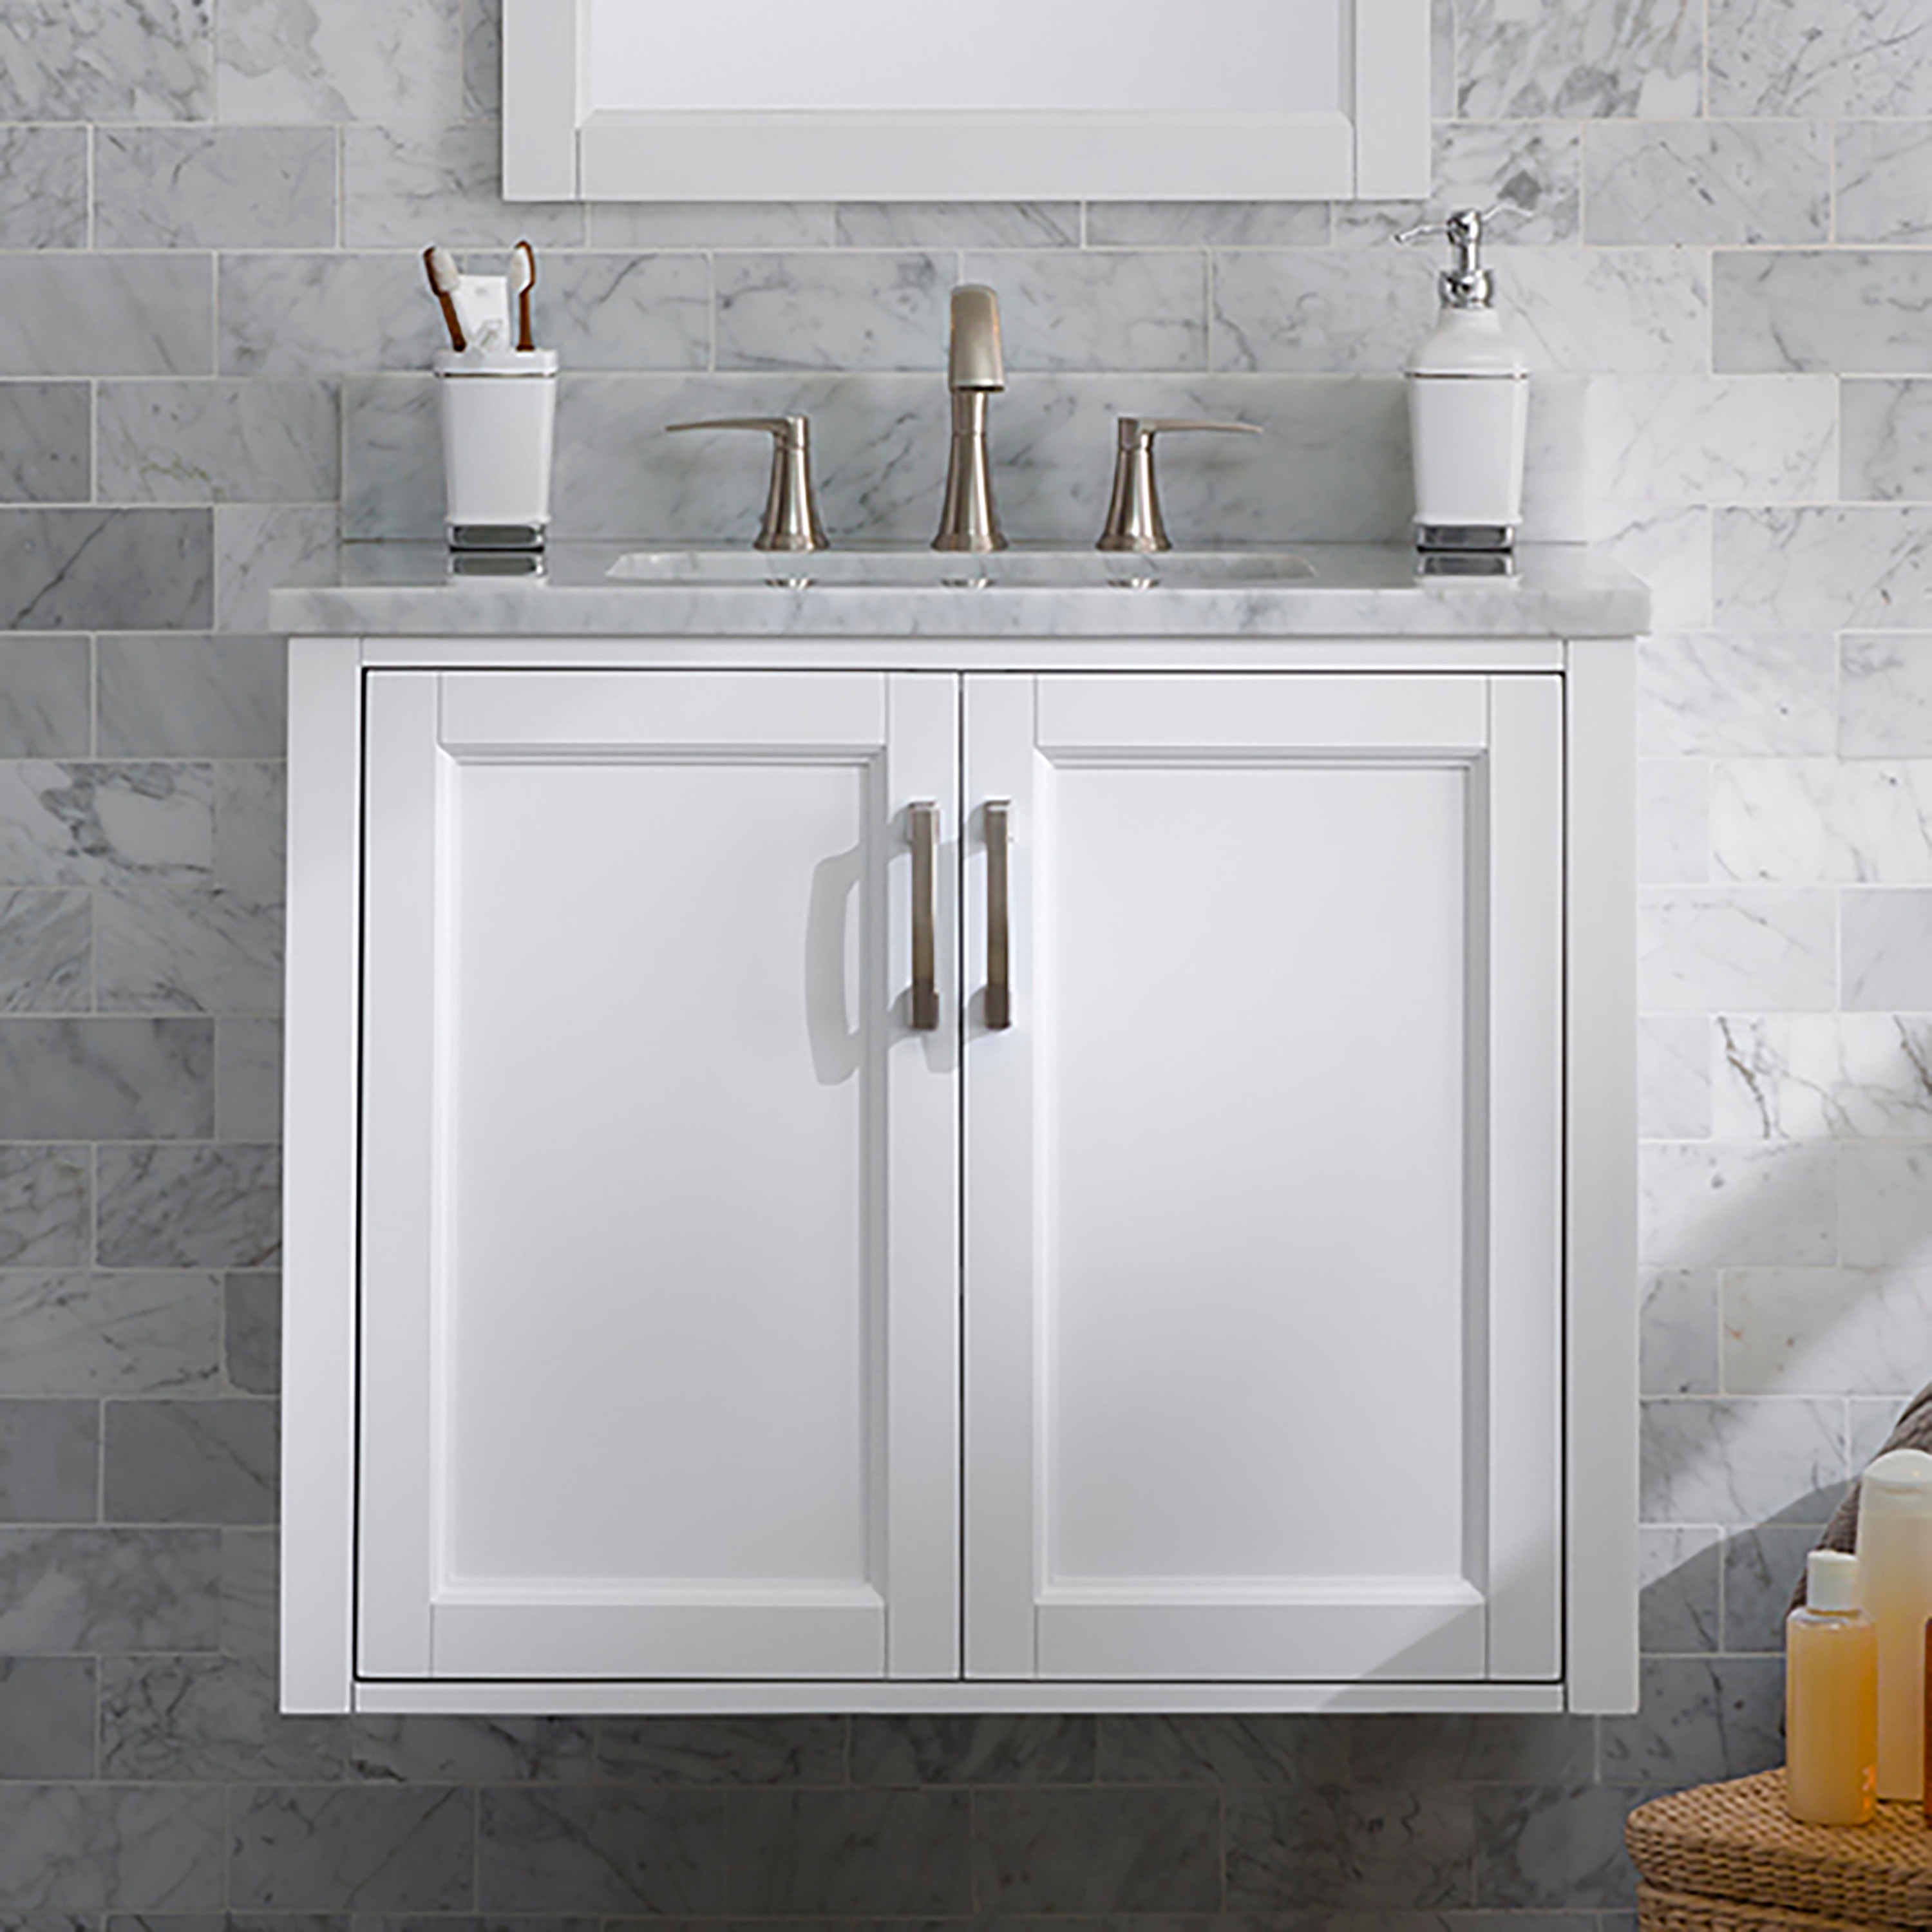 Undermount Single Sink Bathroom Vanity, Bathroom Vanities With Carrara Marble Tops